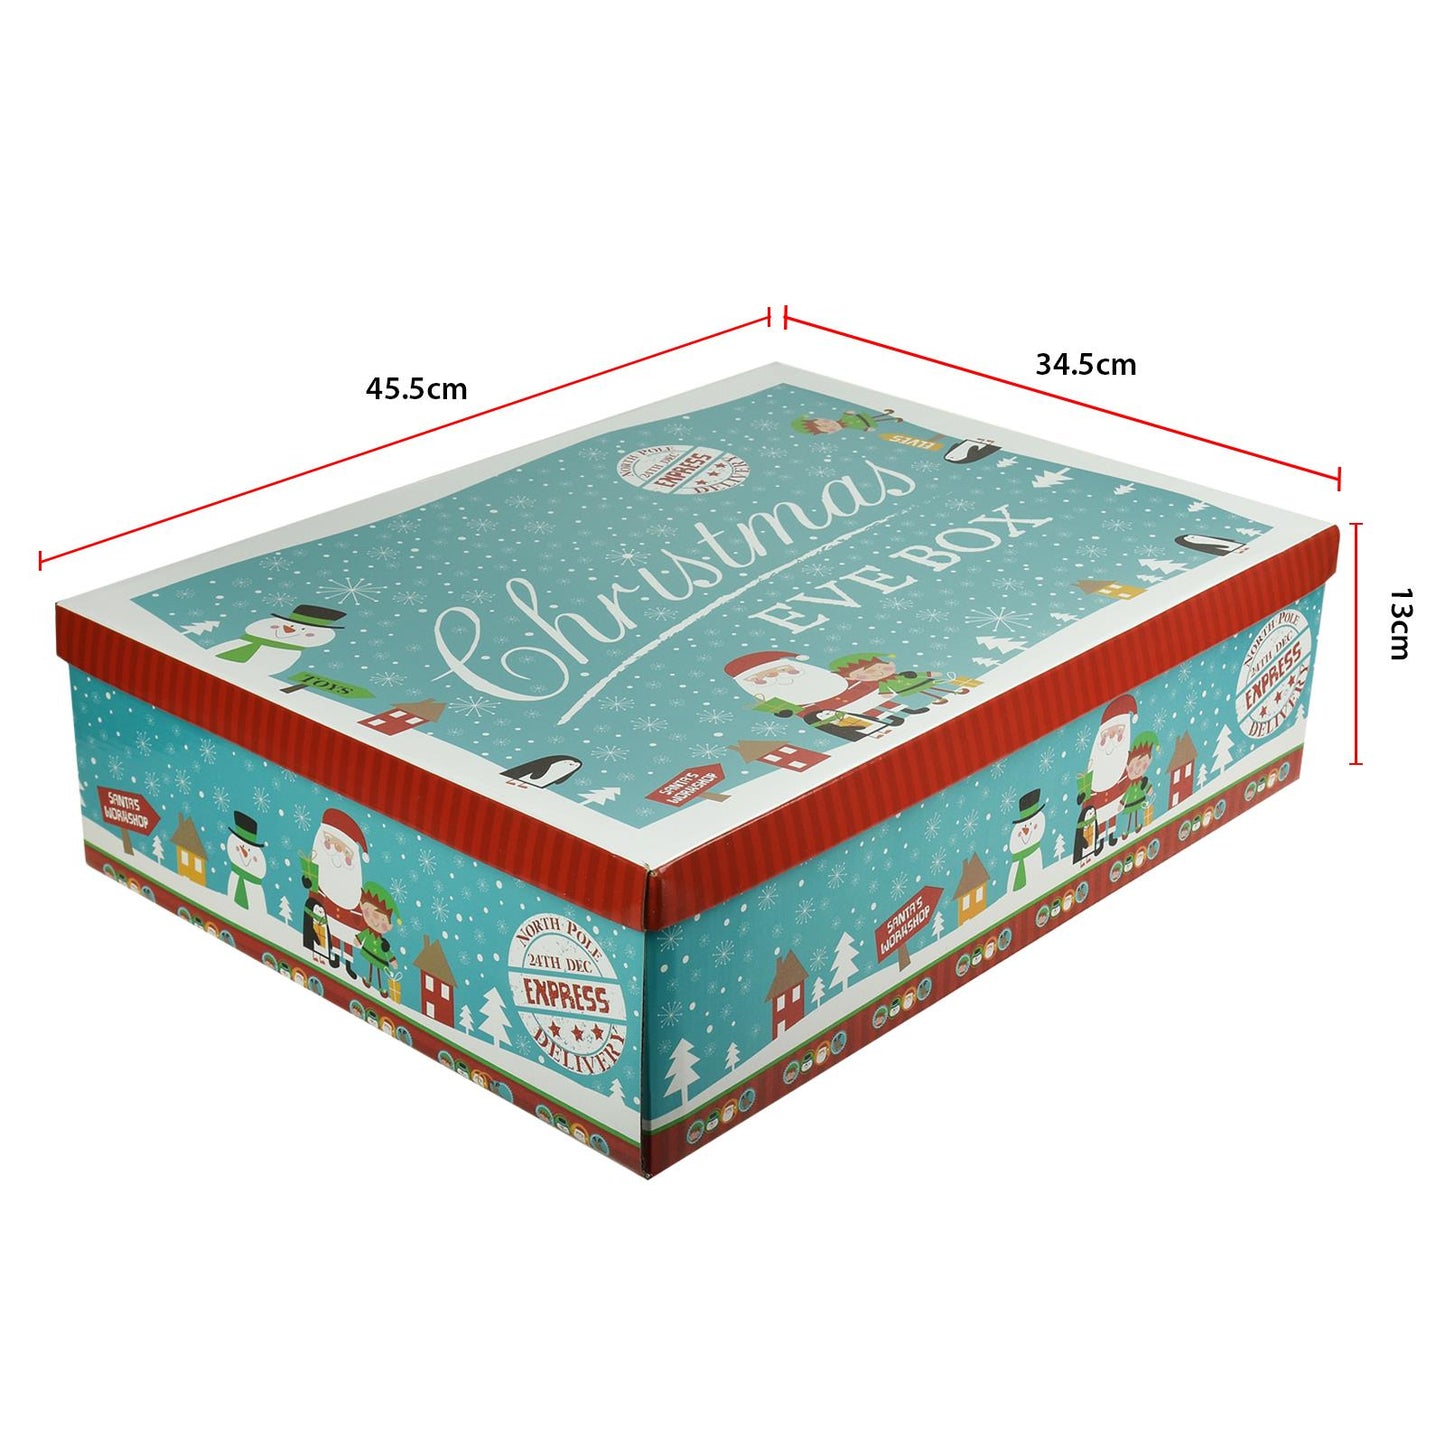 Festive Hamper Box For Christmas Eve Gifts